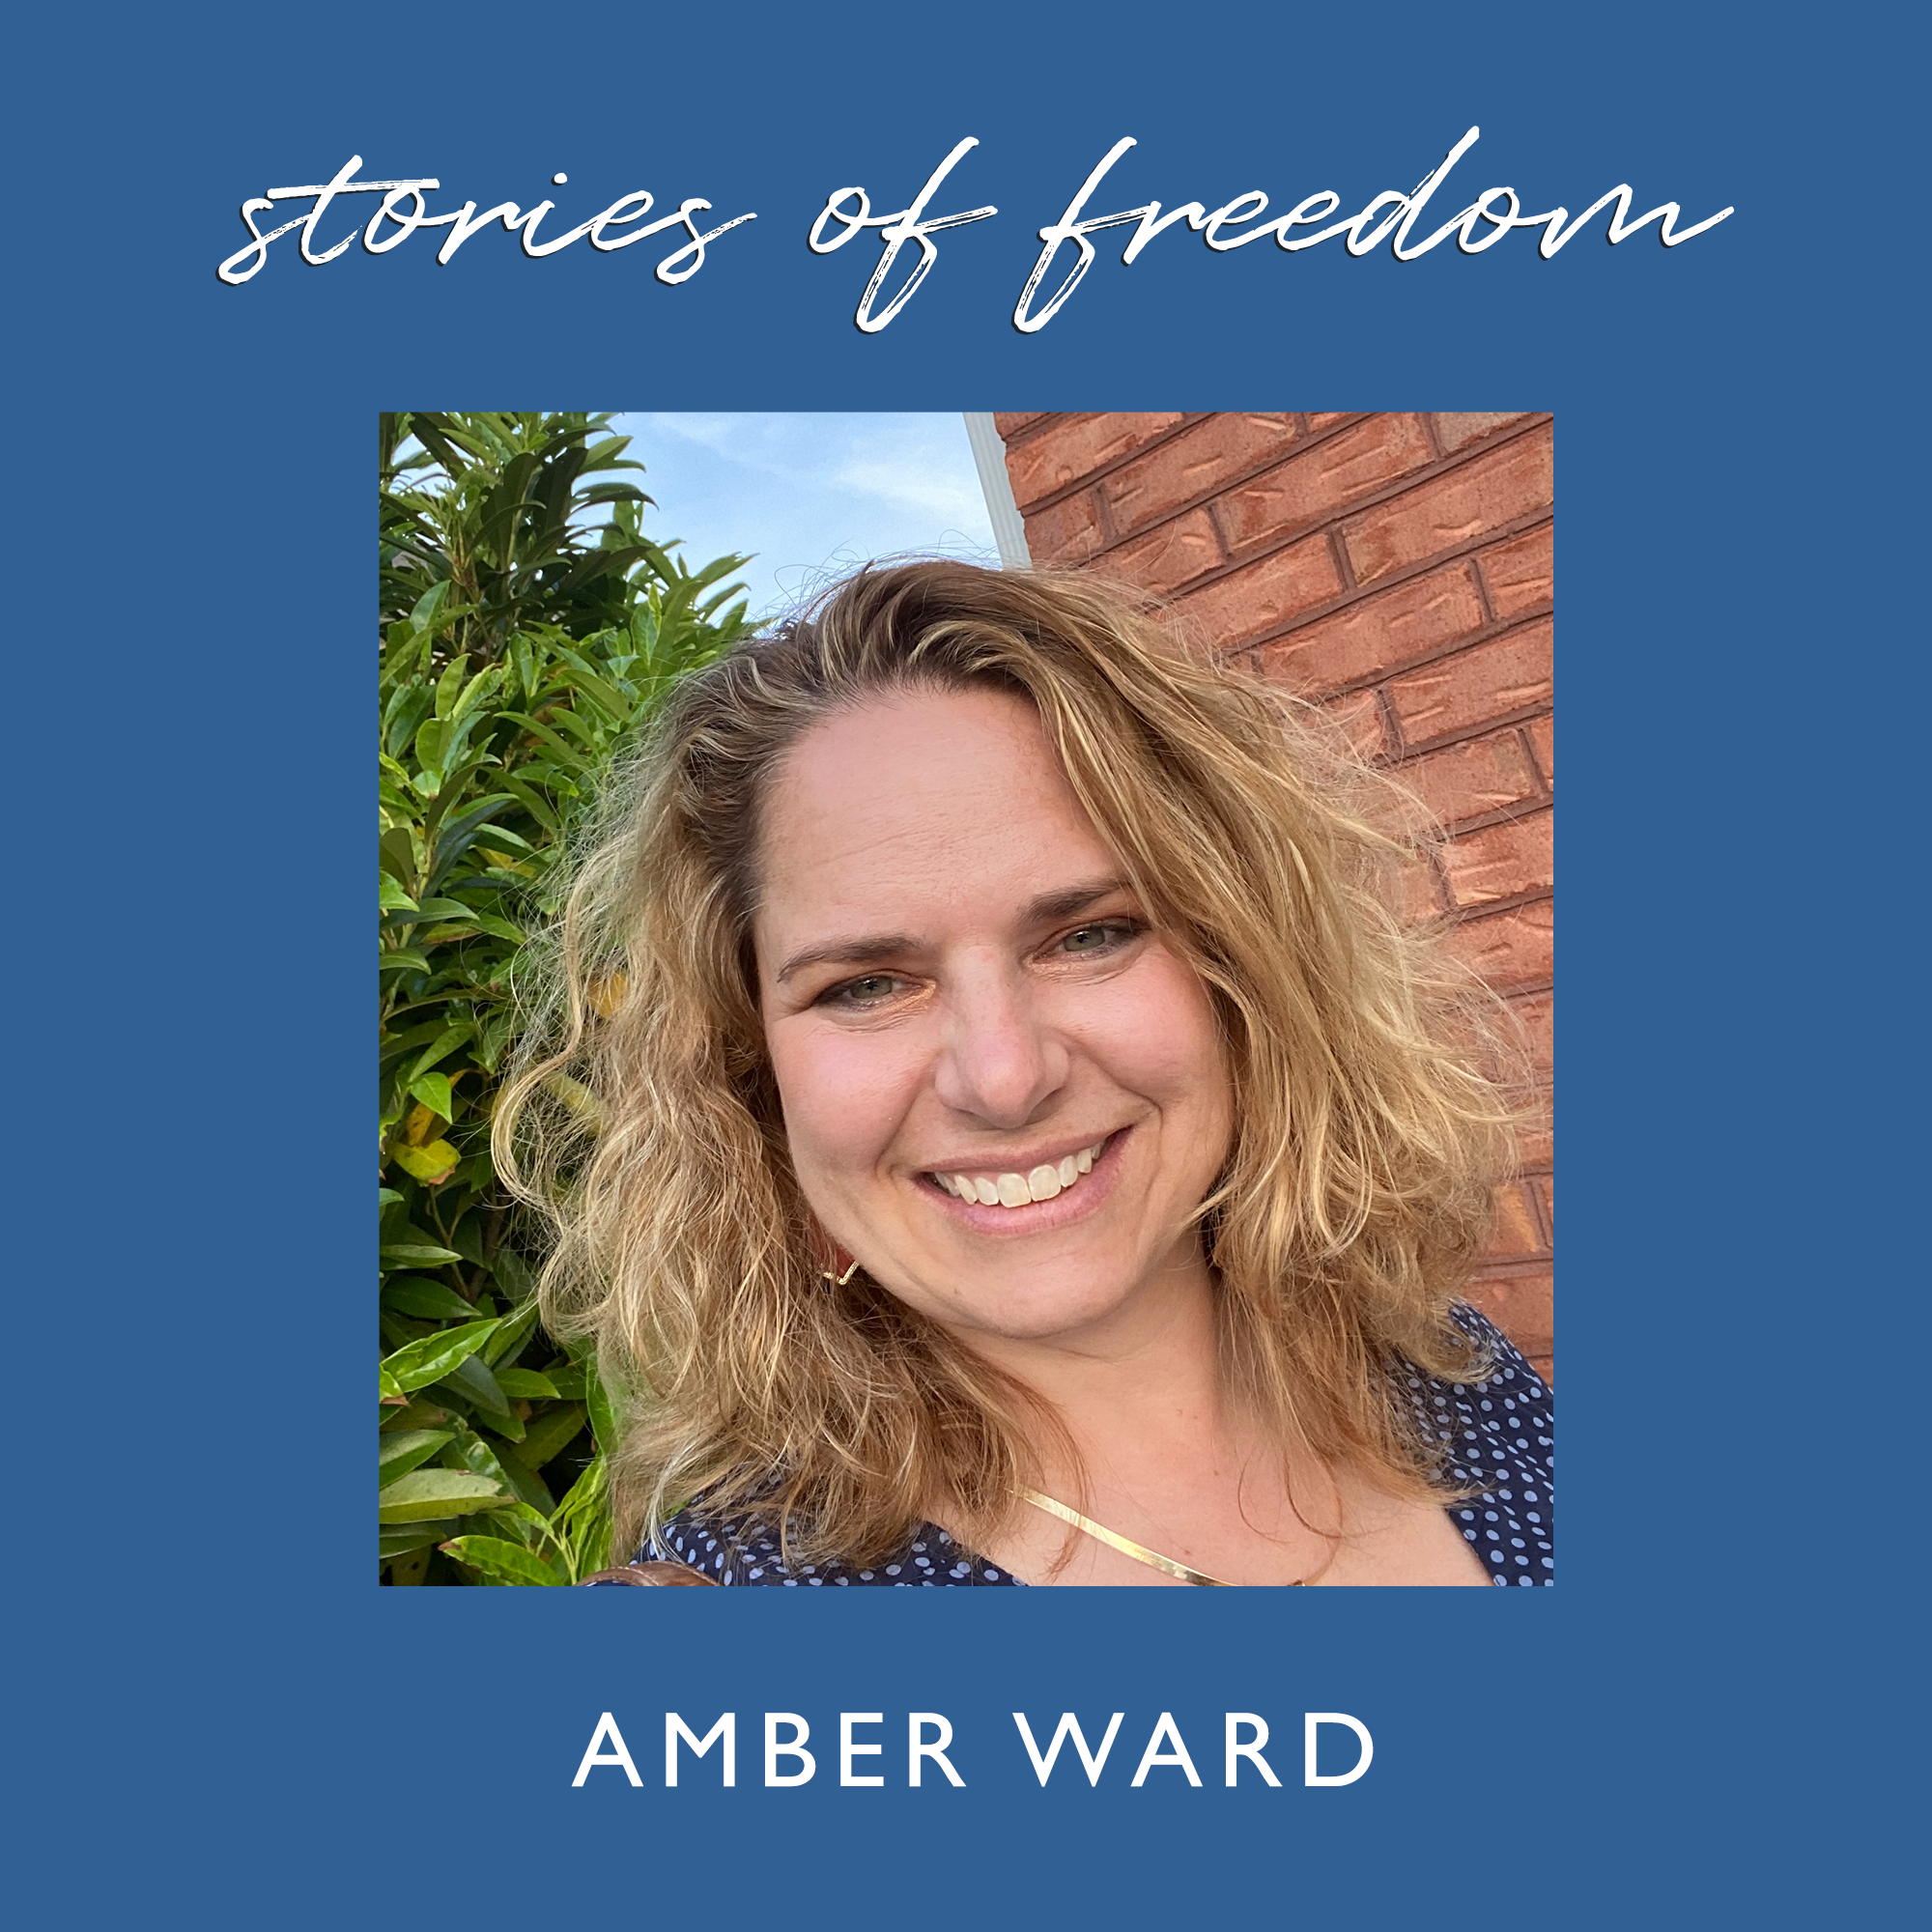 Amber Ward: Learning Forgiveness Amidst Abuse